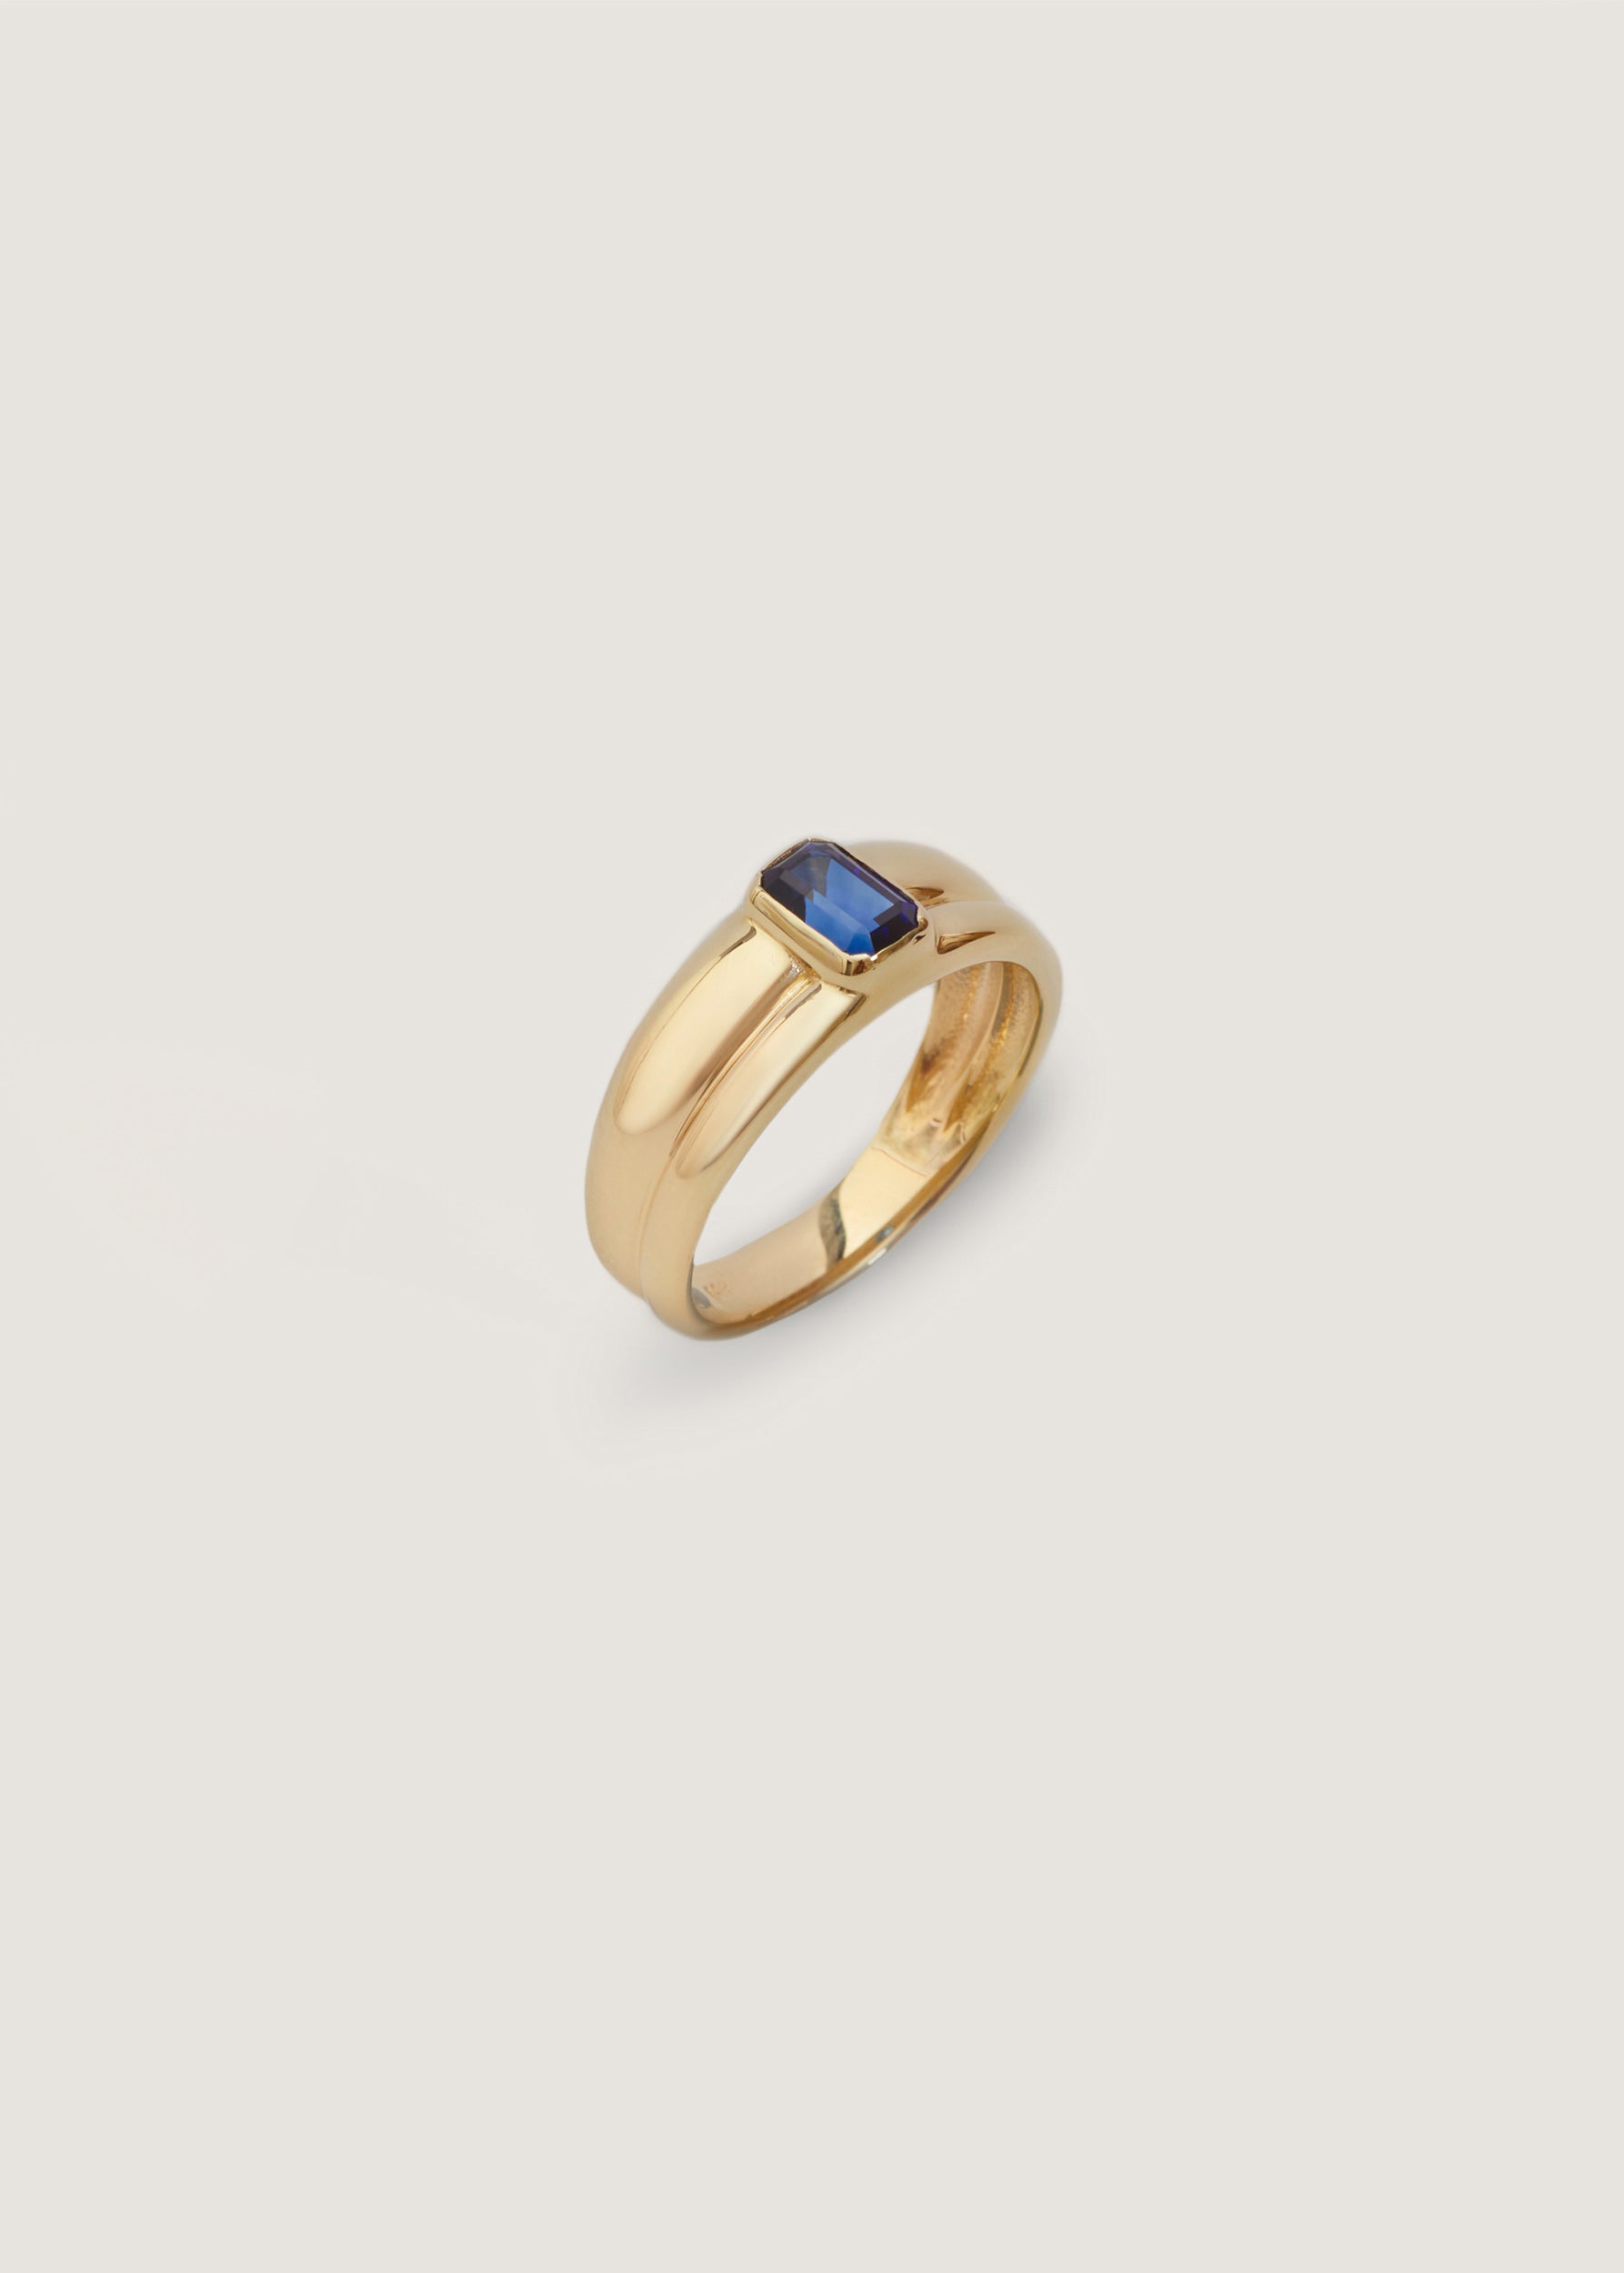 alt="Françoise Stacked Ellipse Ring II - Blue Sapphire"